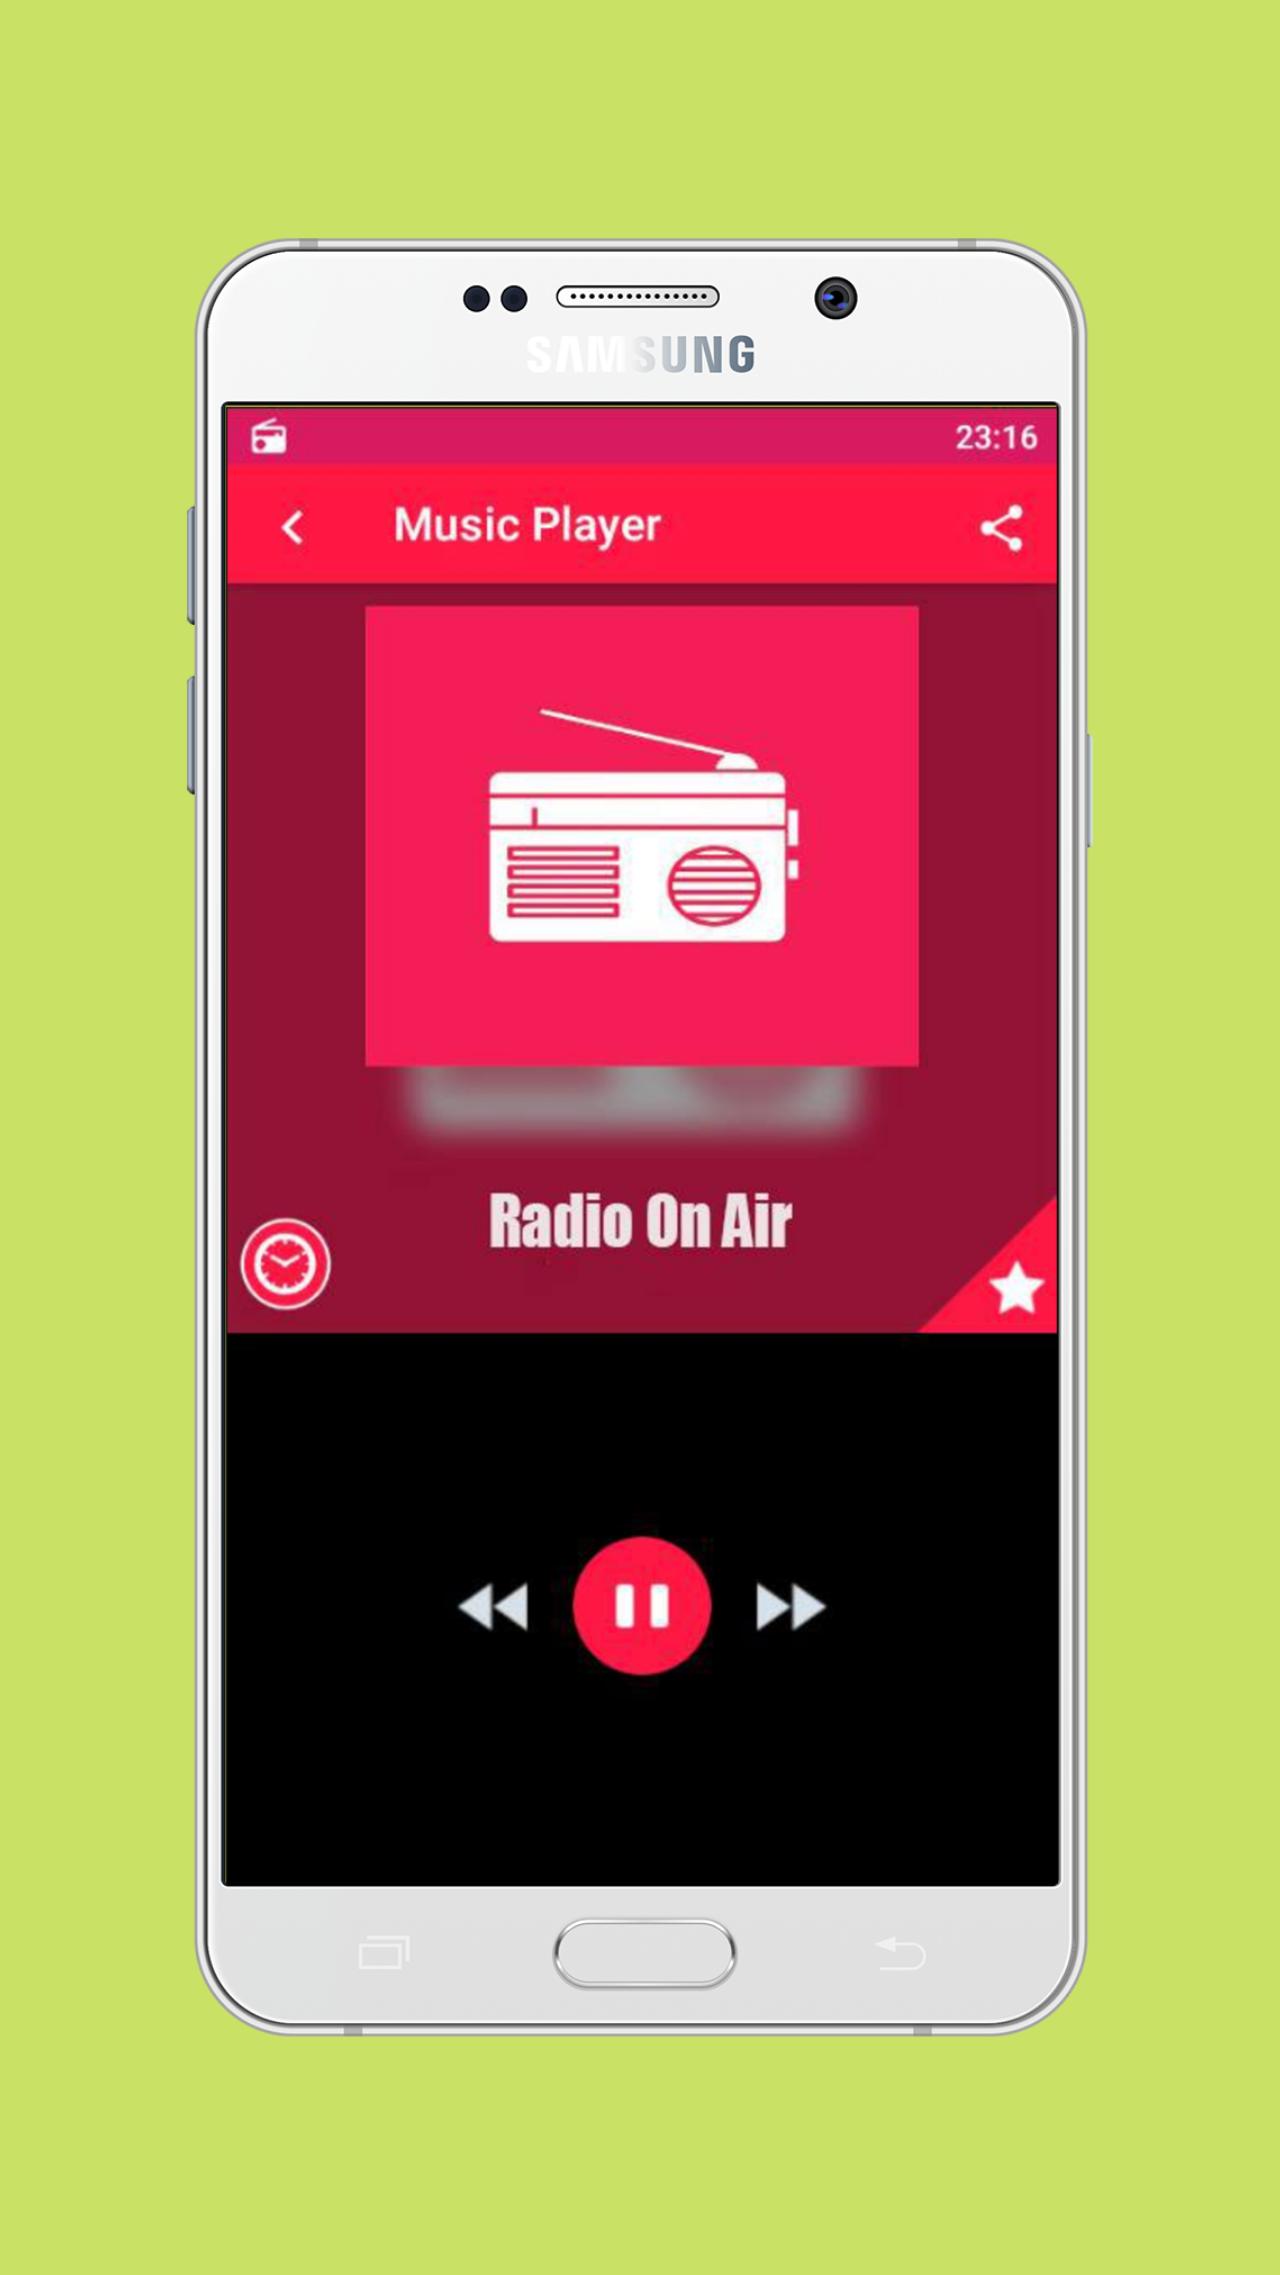 radio nostalgie cote d'ivoire for Android - APK Download